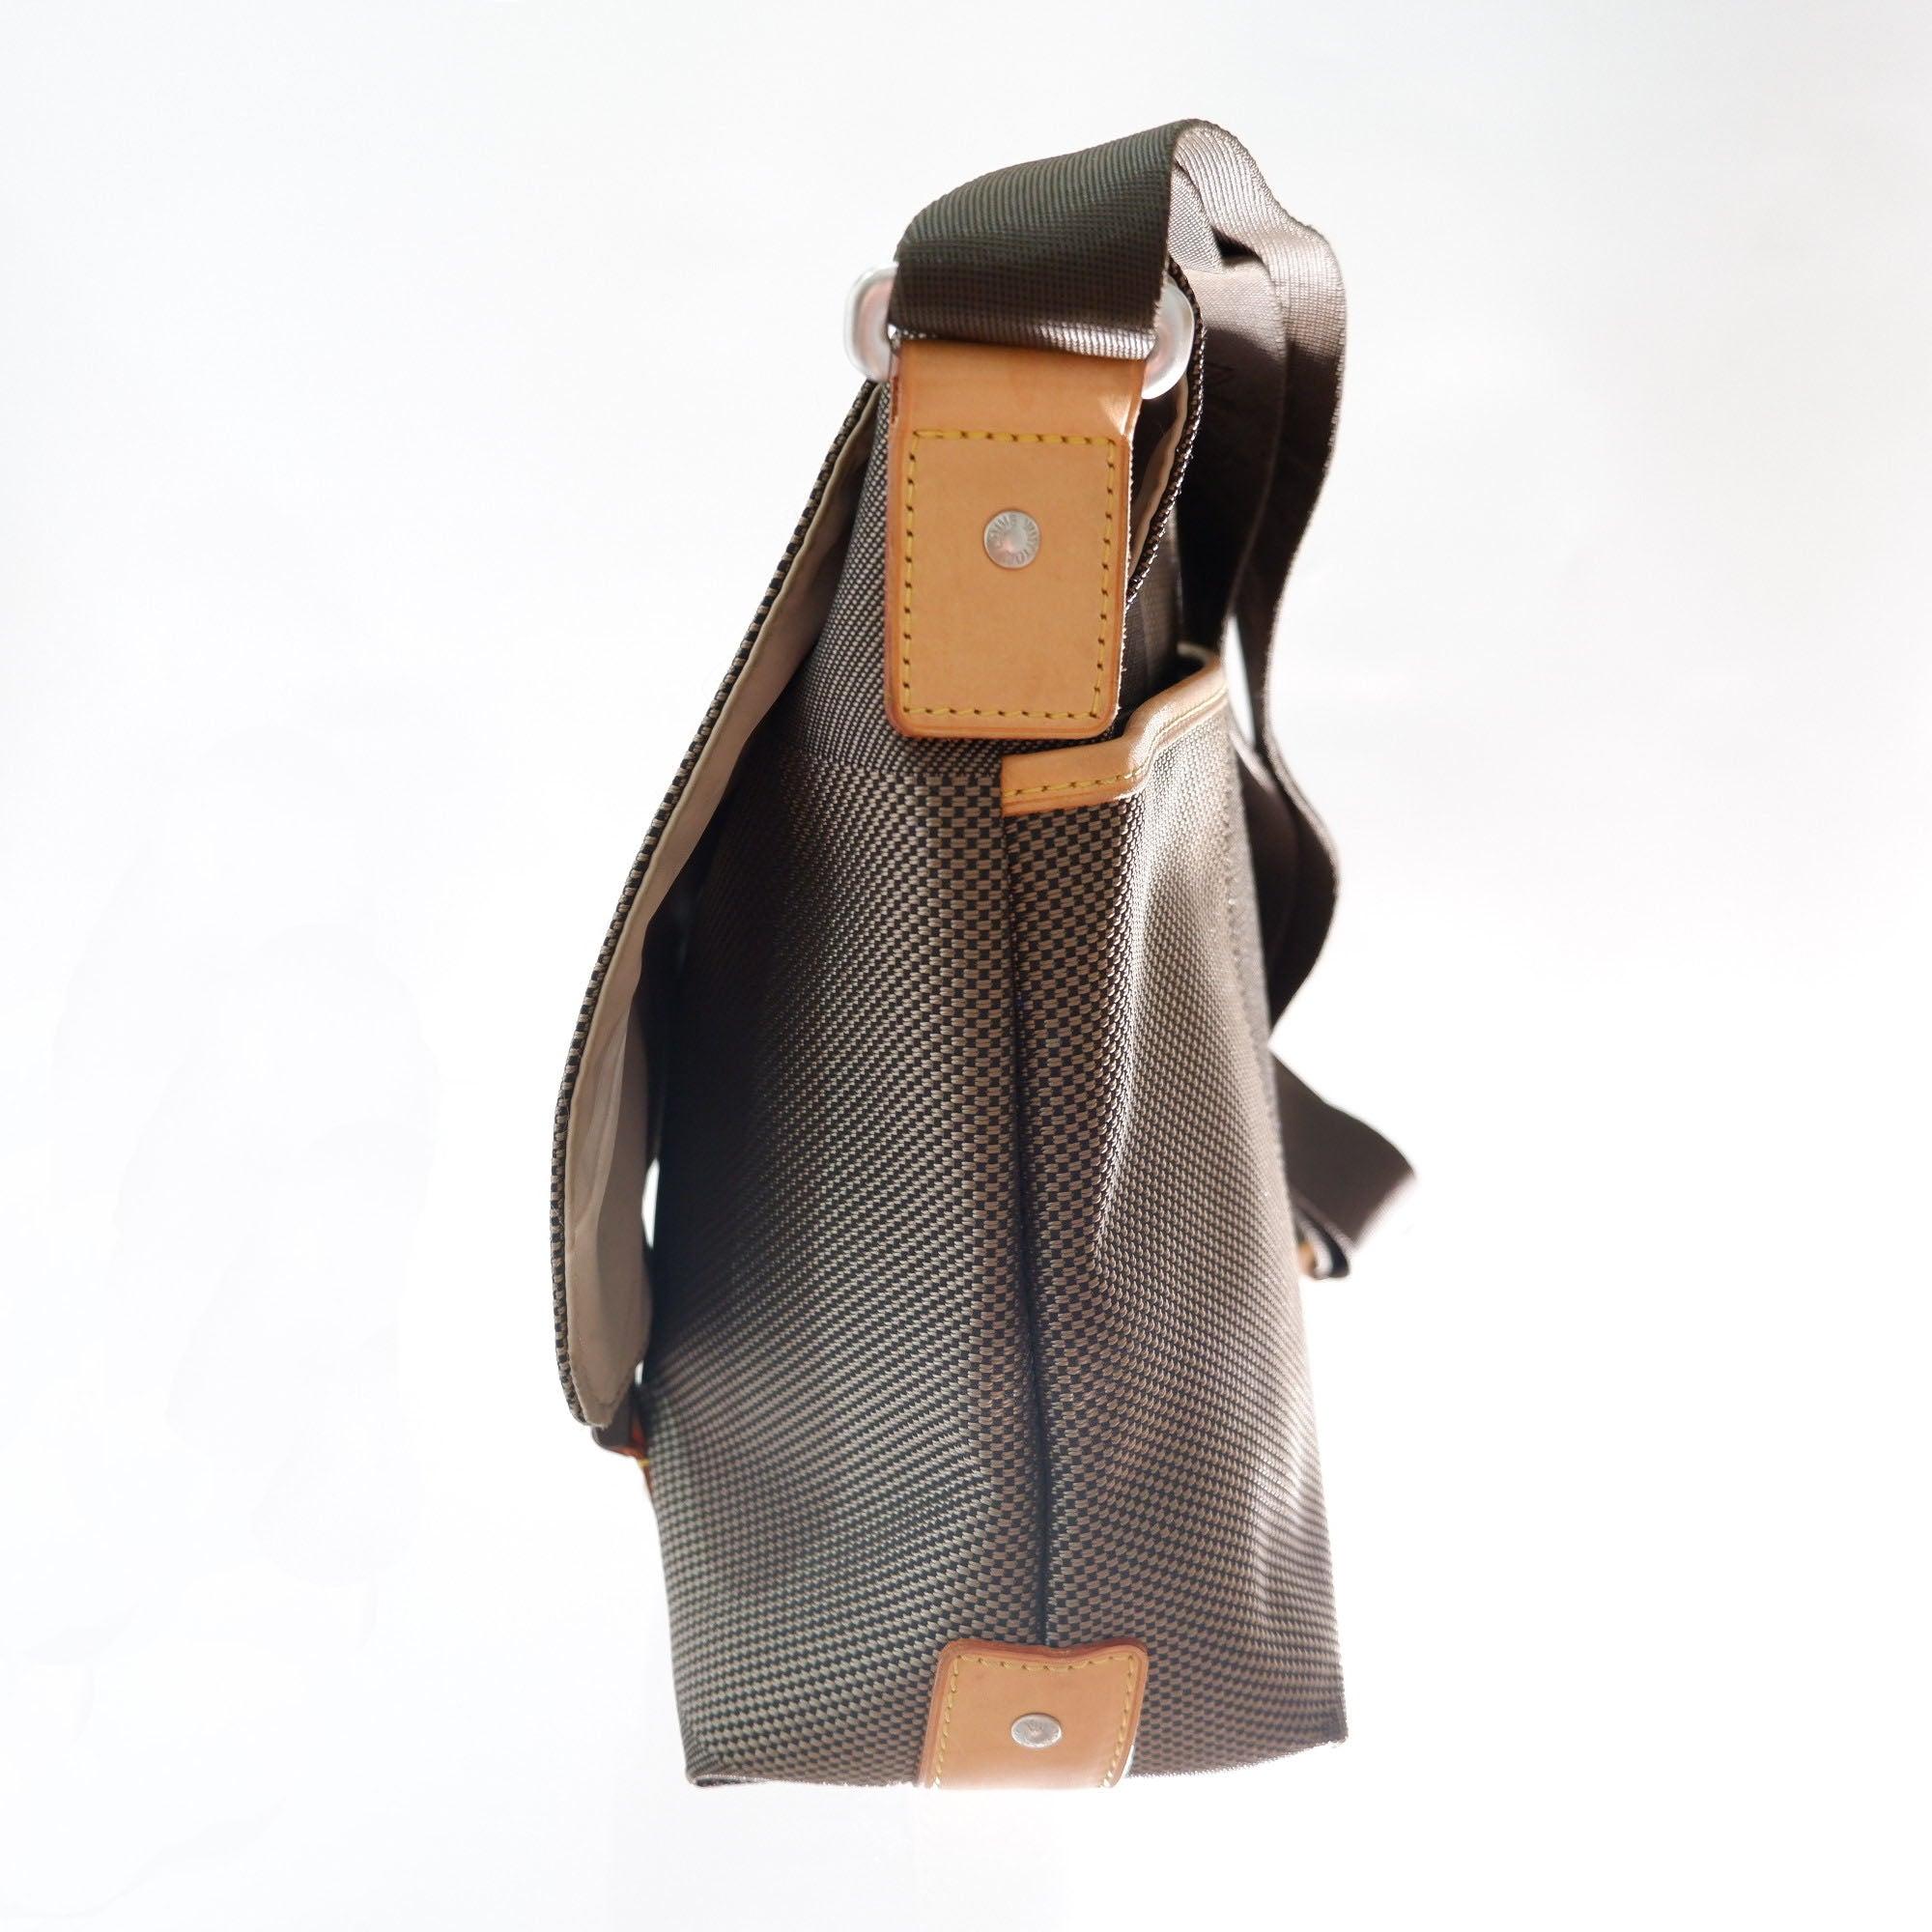 Men's tawny jacquard nylon Louis Vuitton Damier Geant Loup messenger bag with silver-tone hardware, tan vachetta leather trim, single adjustable brown nylon shoulder strap, single pocket at exterior with zip closure, beige nylon lining, dual pockets